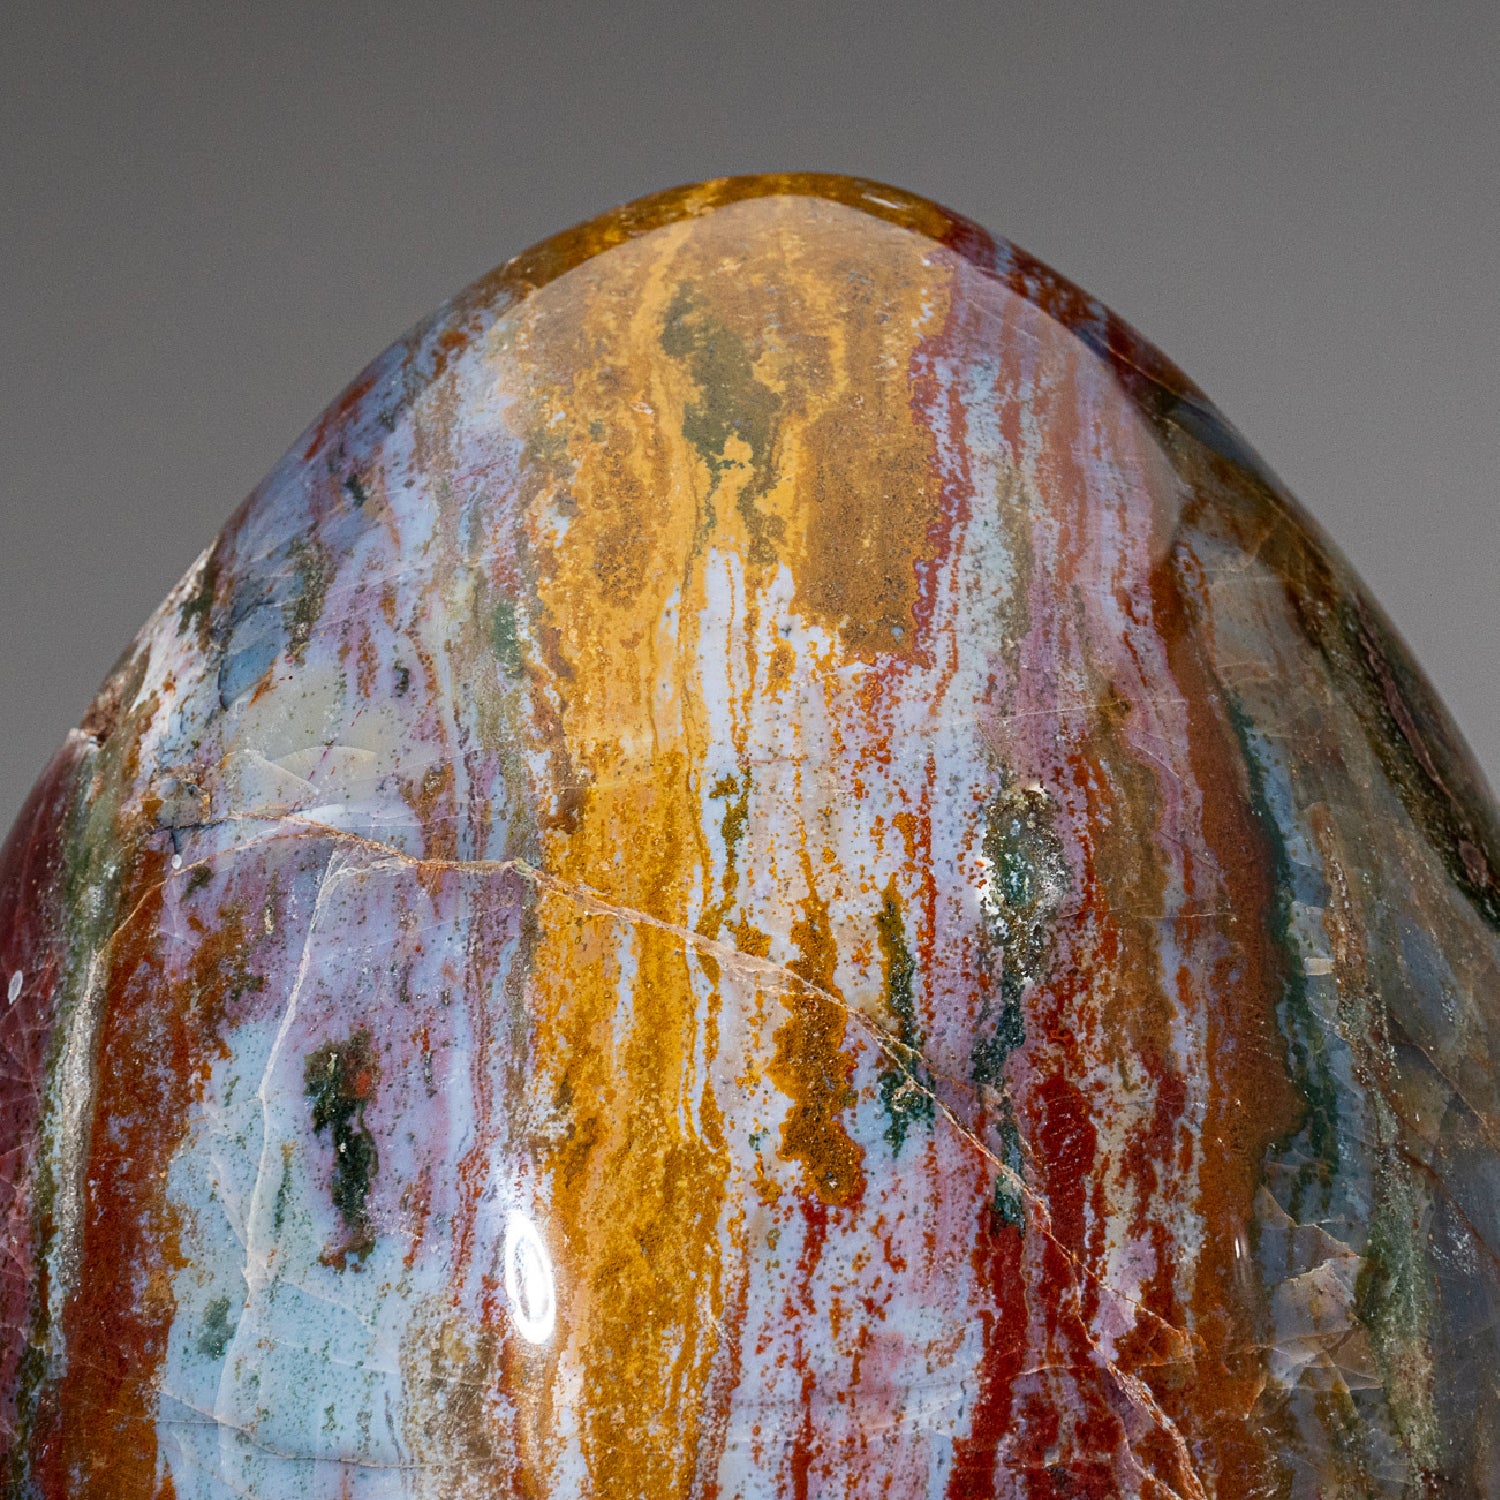 Huge Genuine Polished Ocean Jasper Egg from Madagascar (48 lbs)